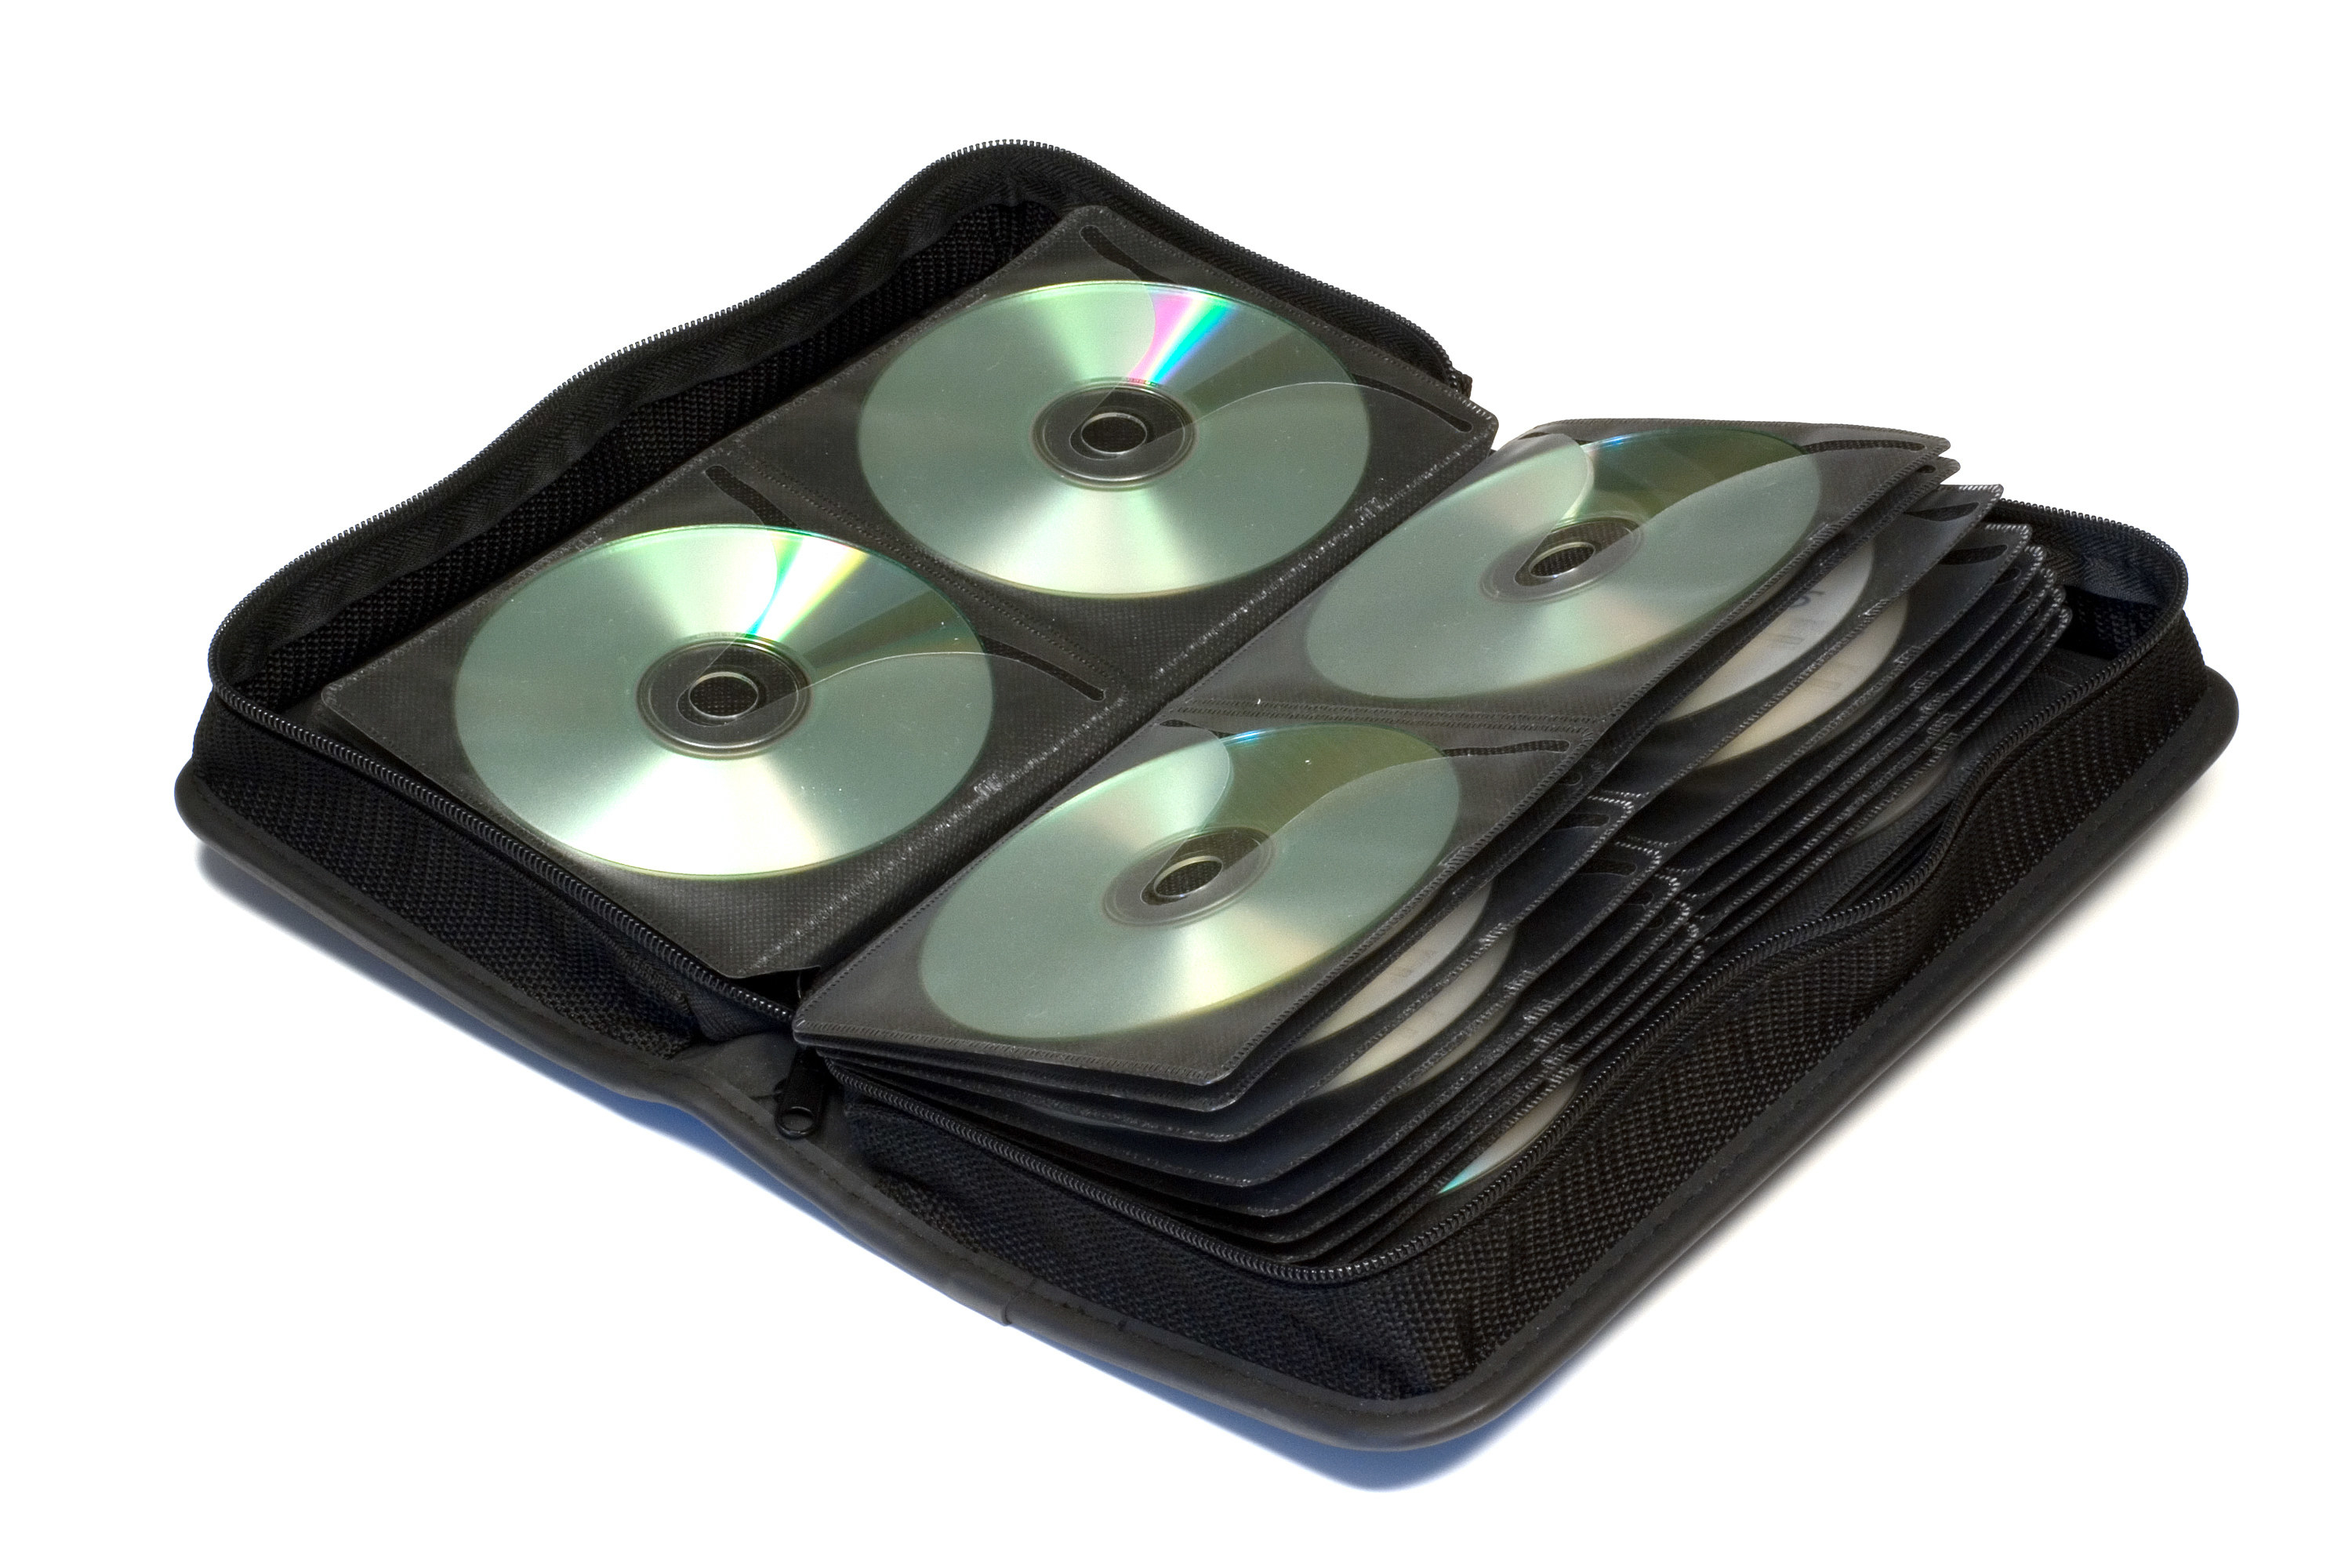 A binder full of blank CDs